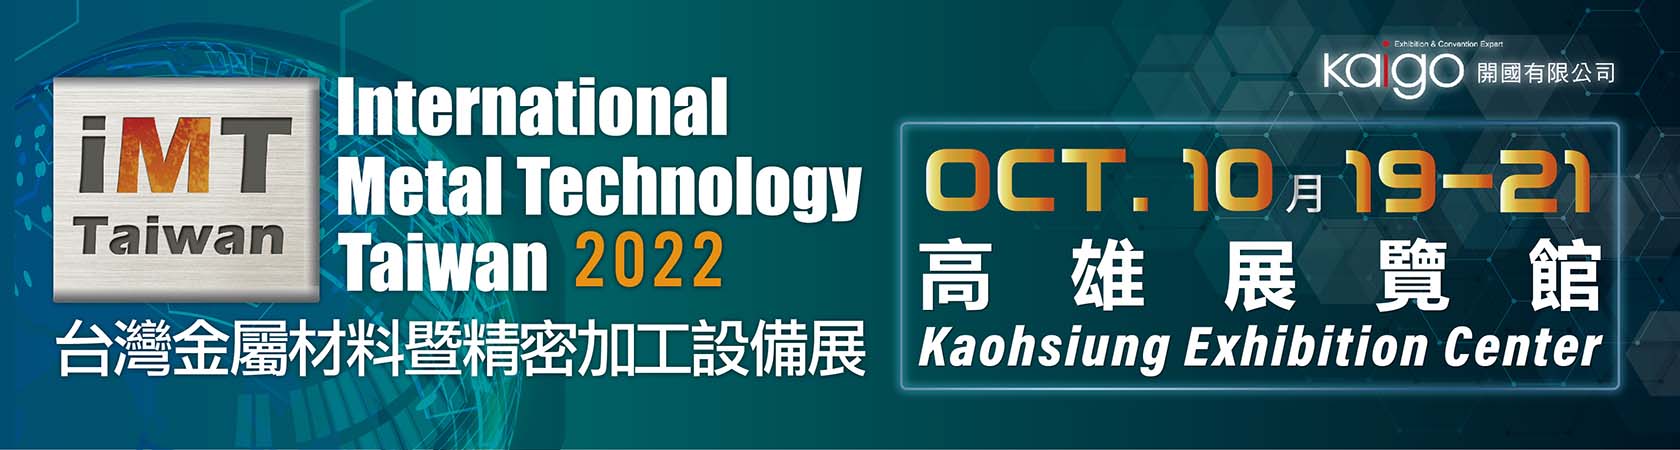 International Metal Technology Taiwan 2022